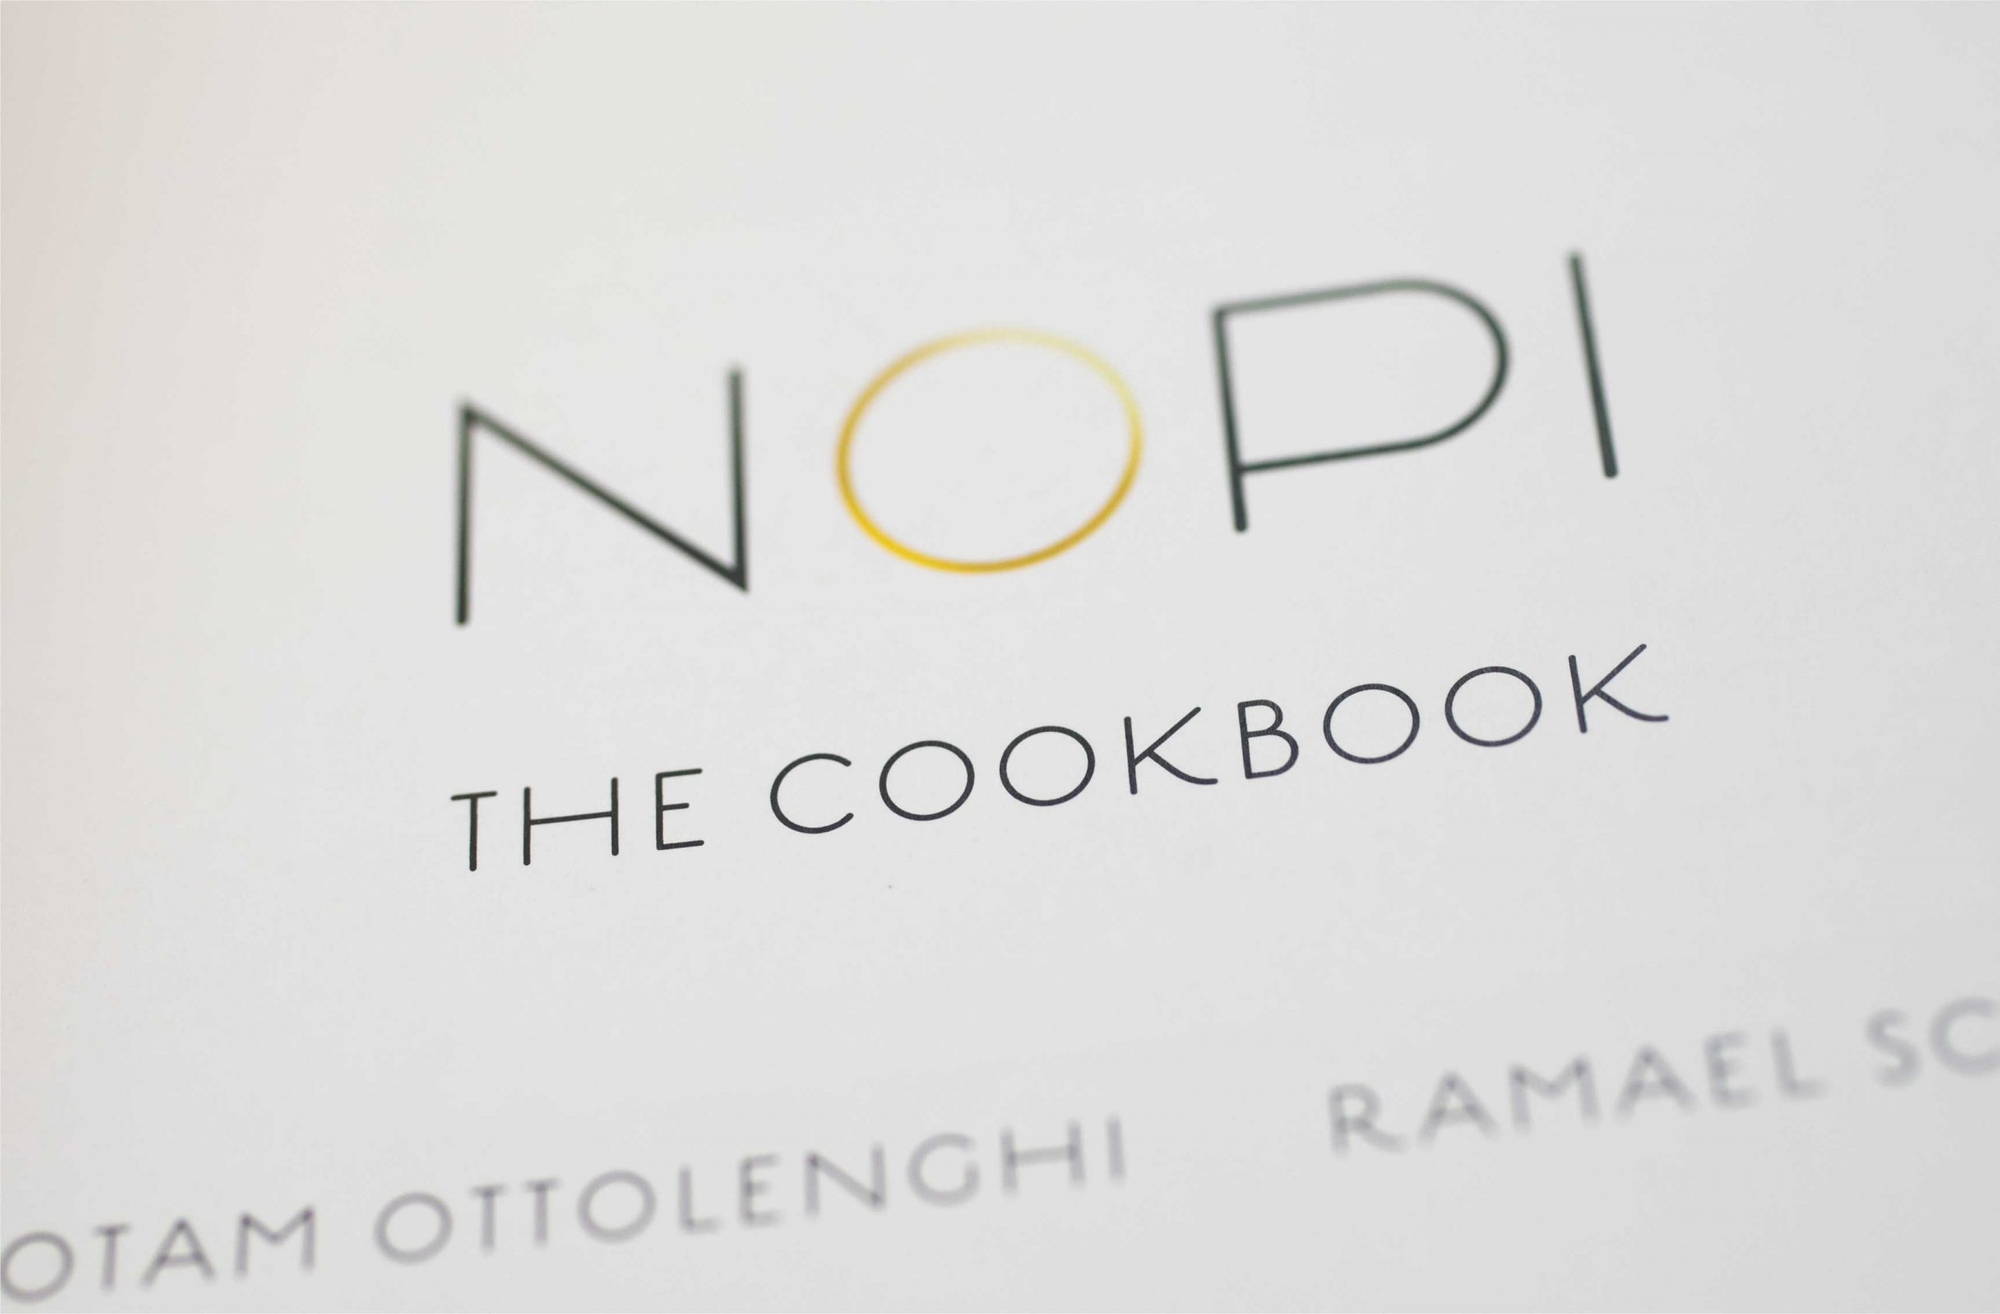 NOPI cookbook cover logo